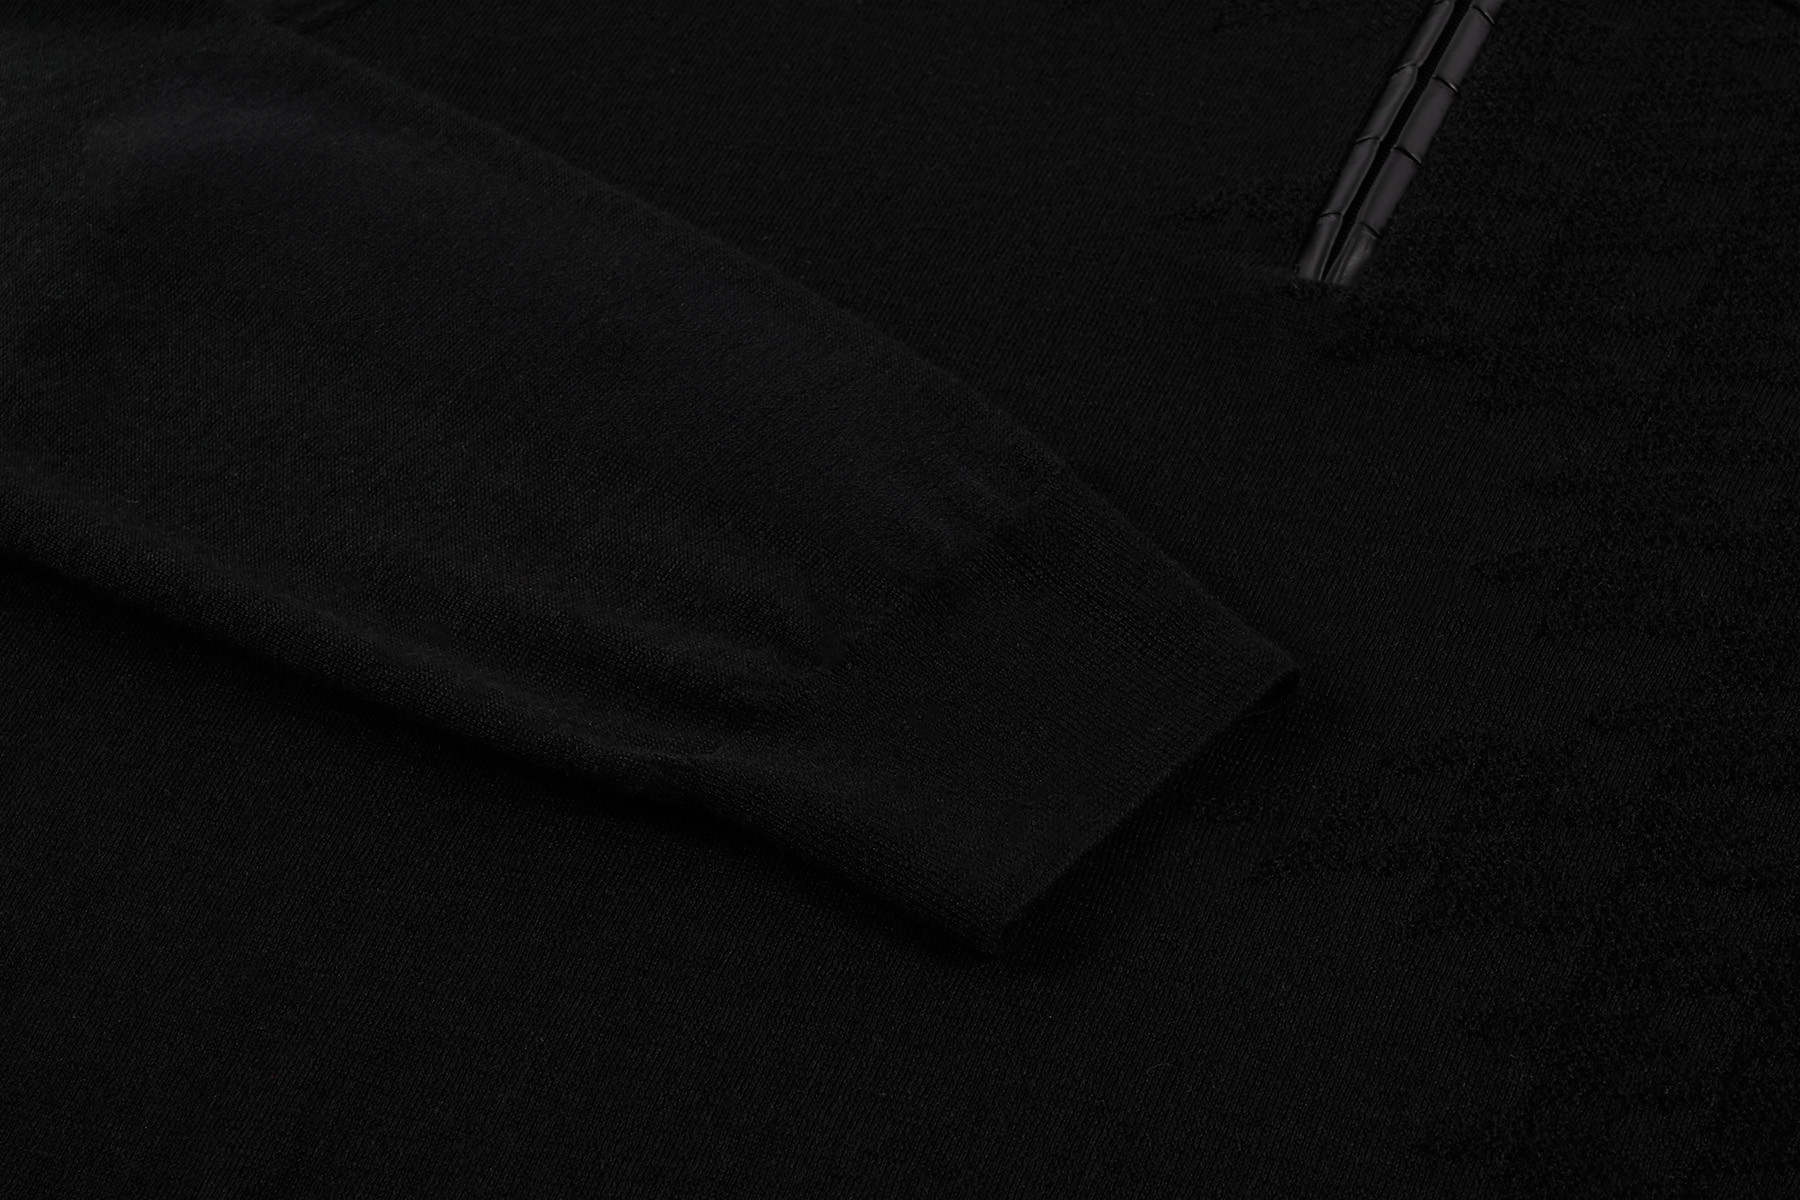 Black polo shirt, houndstooth jacquard weave, crocodile detail